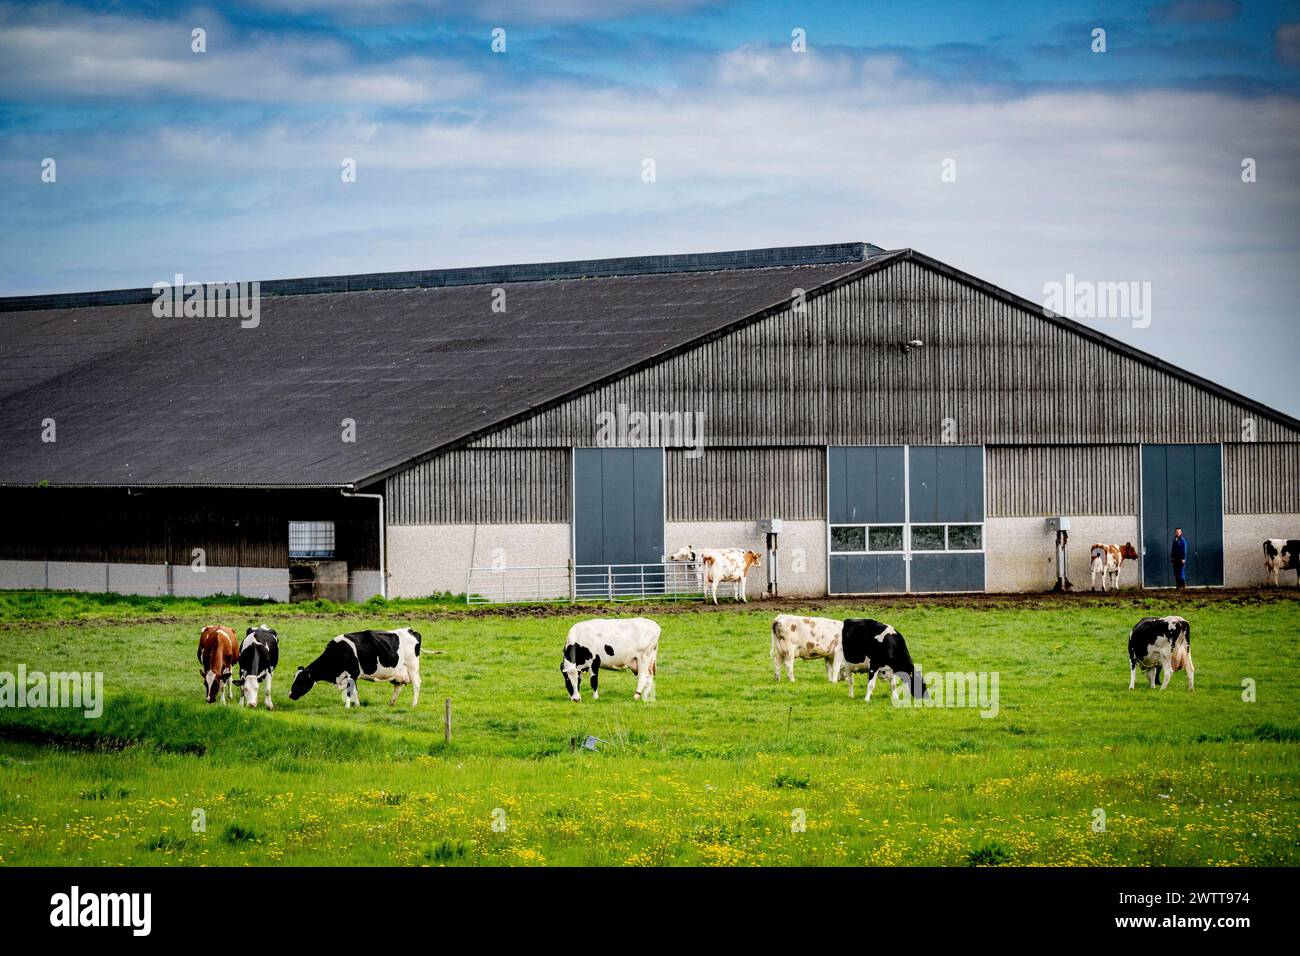 Cows grazing near a farm building under a cloudy sky. Stock Photo